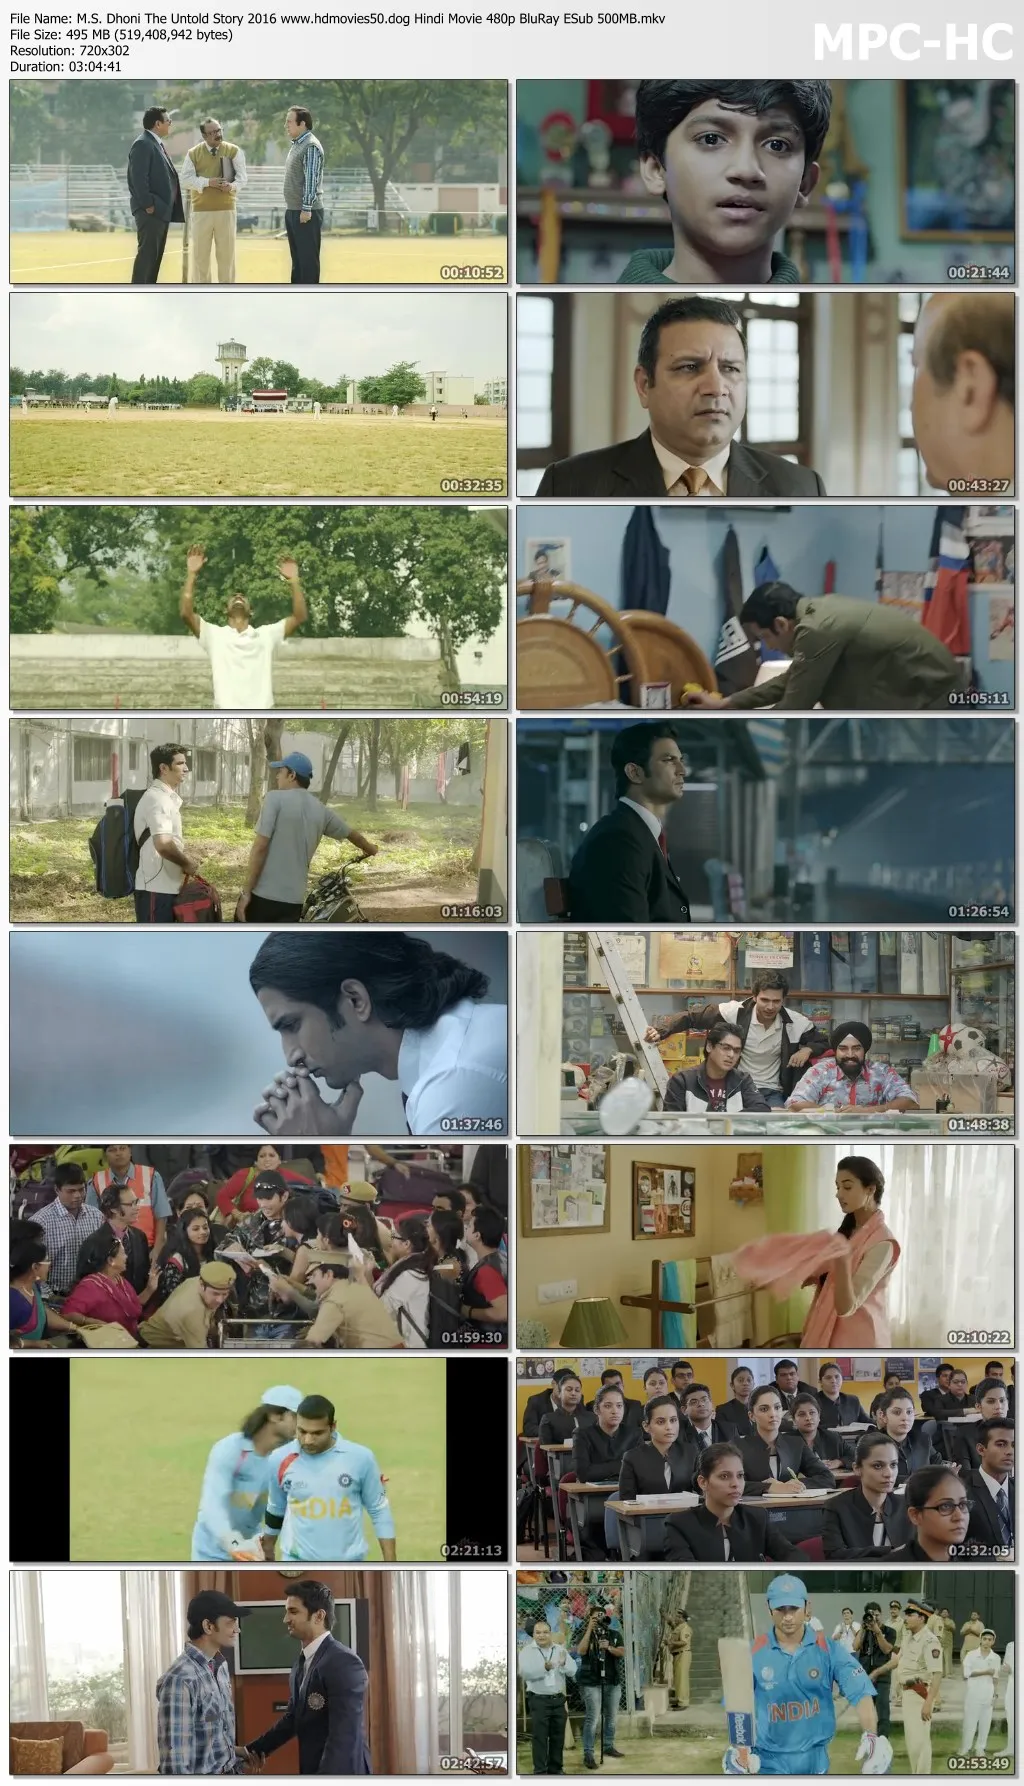 M.S. Dhoni The Untold Story 2016 Hindi Movie 1080p BluRay ESub 2.9GB Download